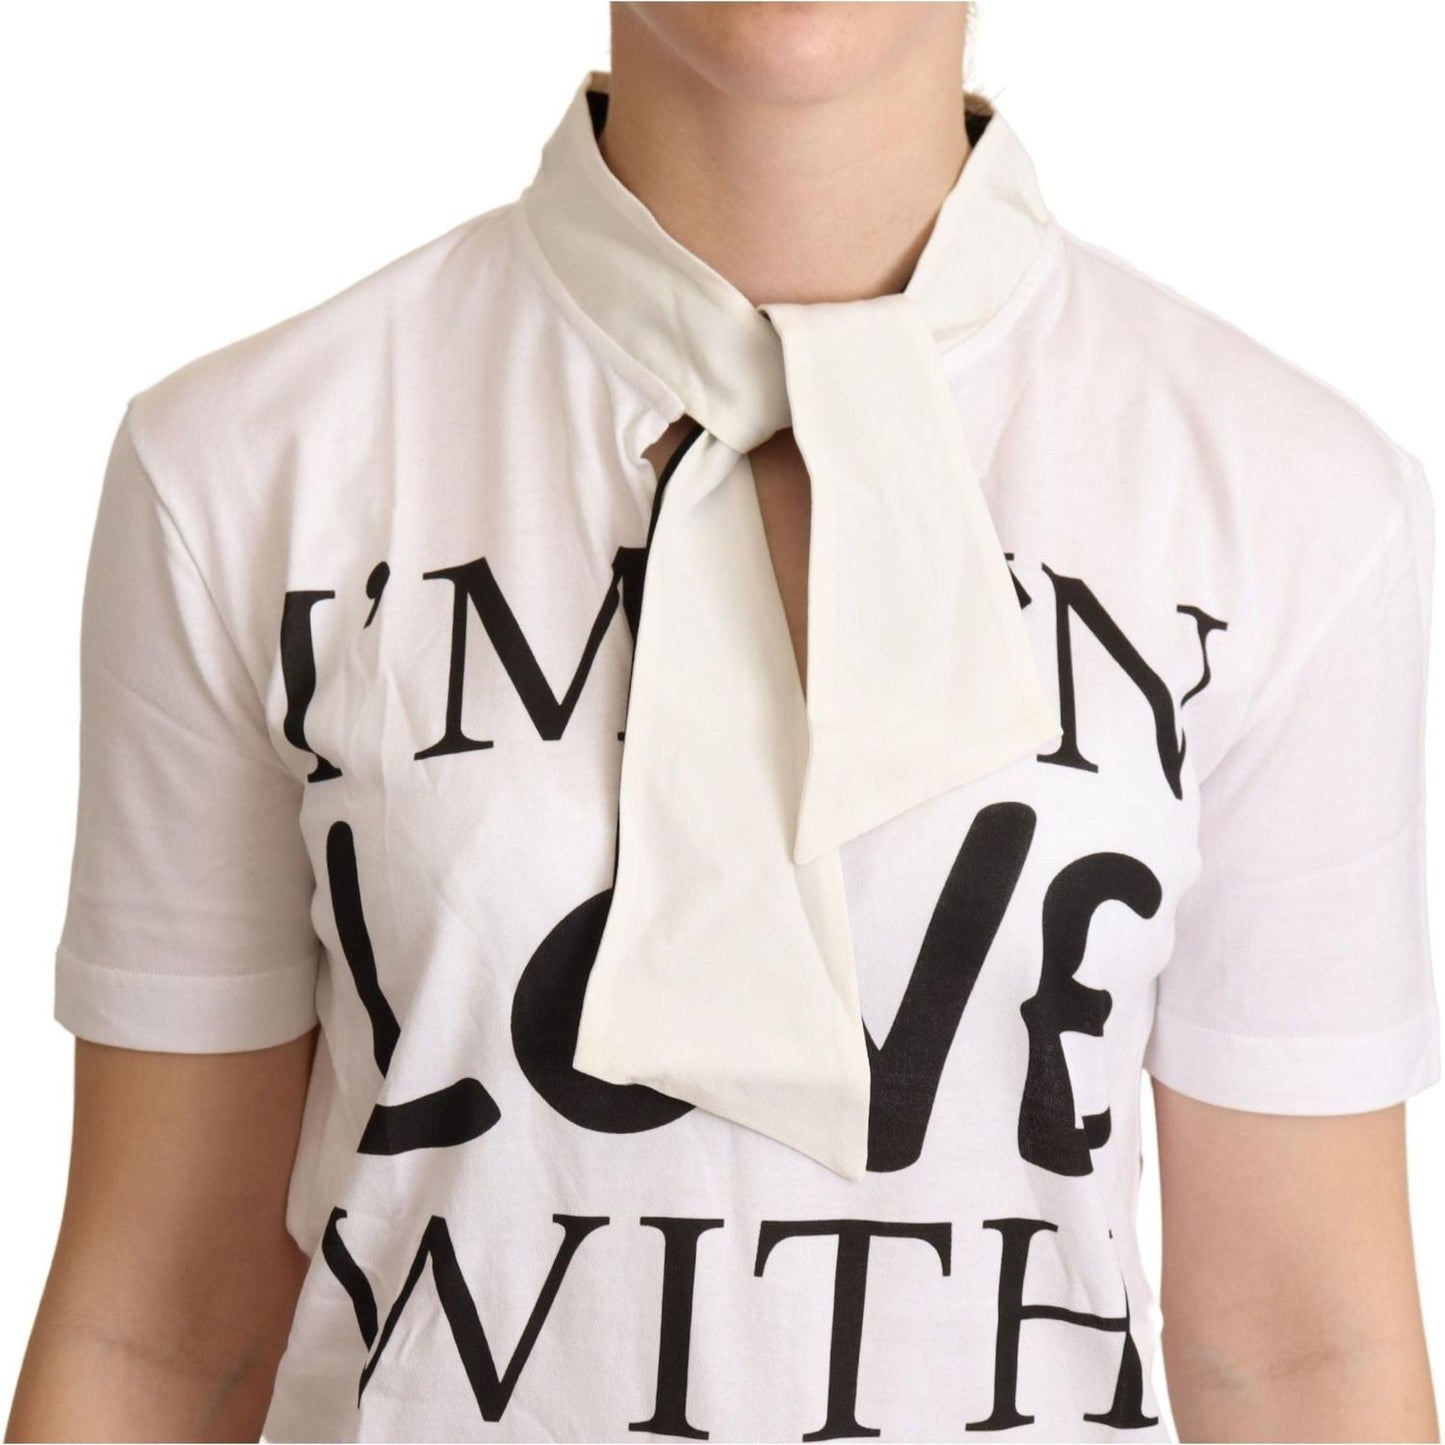 Dolce & Gabbana Chic White Love Motif Silk-Blend Tee white-cotton-silk-im-in-love-top-t-shirt